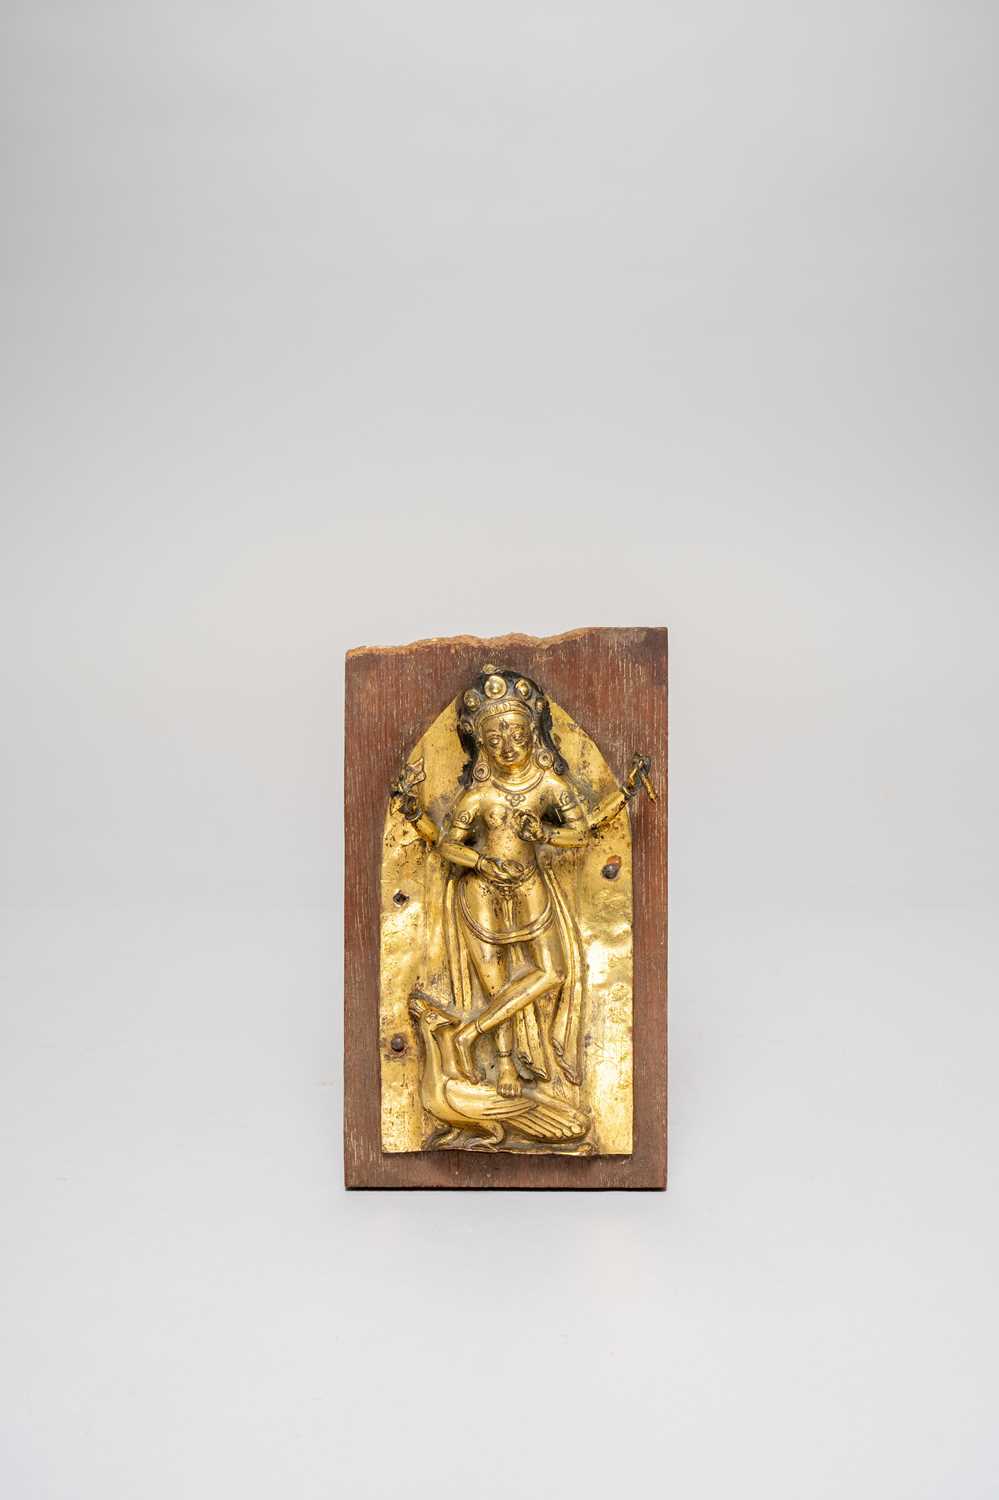 A NEPALESE GILT-COPPER REPOUSSE PLAQUE DEPICTING KAUMARI 17TH CENTURY The four-armed Goddess Kaumari